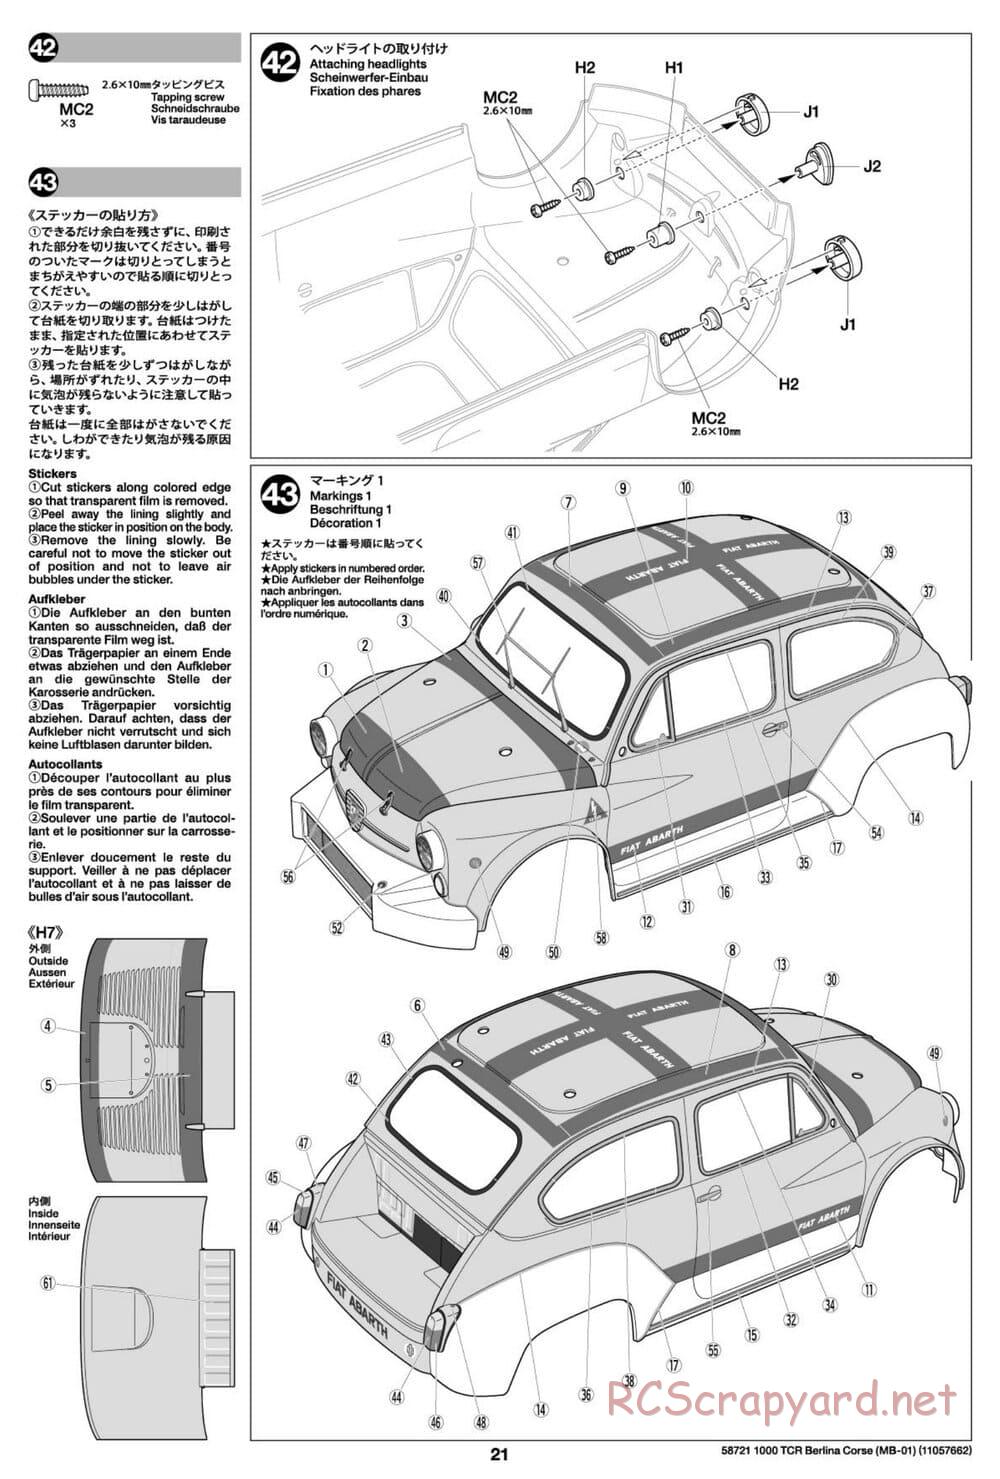 Tamiya - Fiat Abarth 1000 TCR Berlina Corsa - MB-01 Chassis - Manual - Page 21